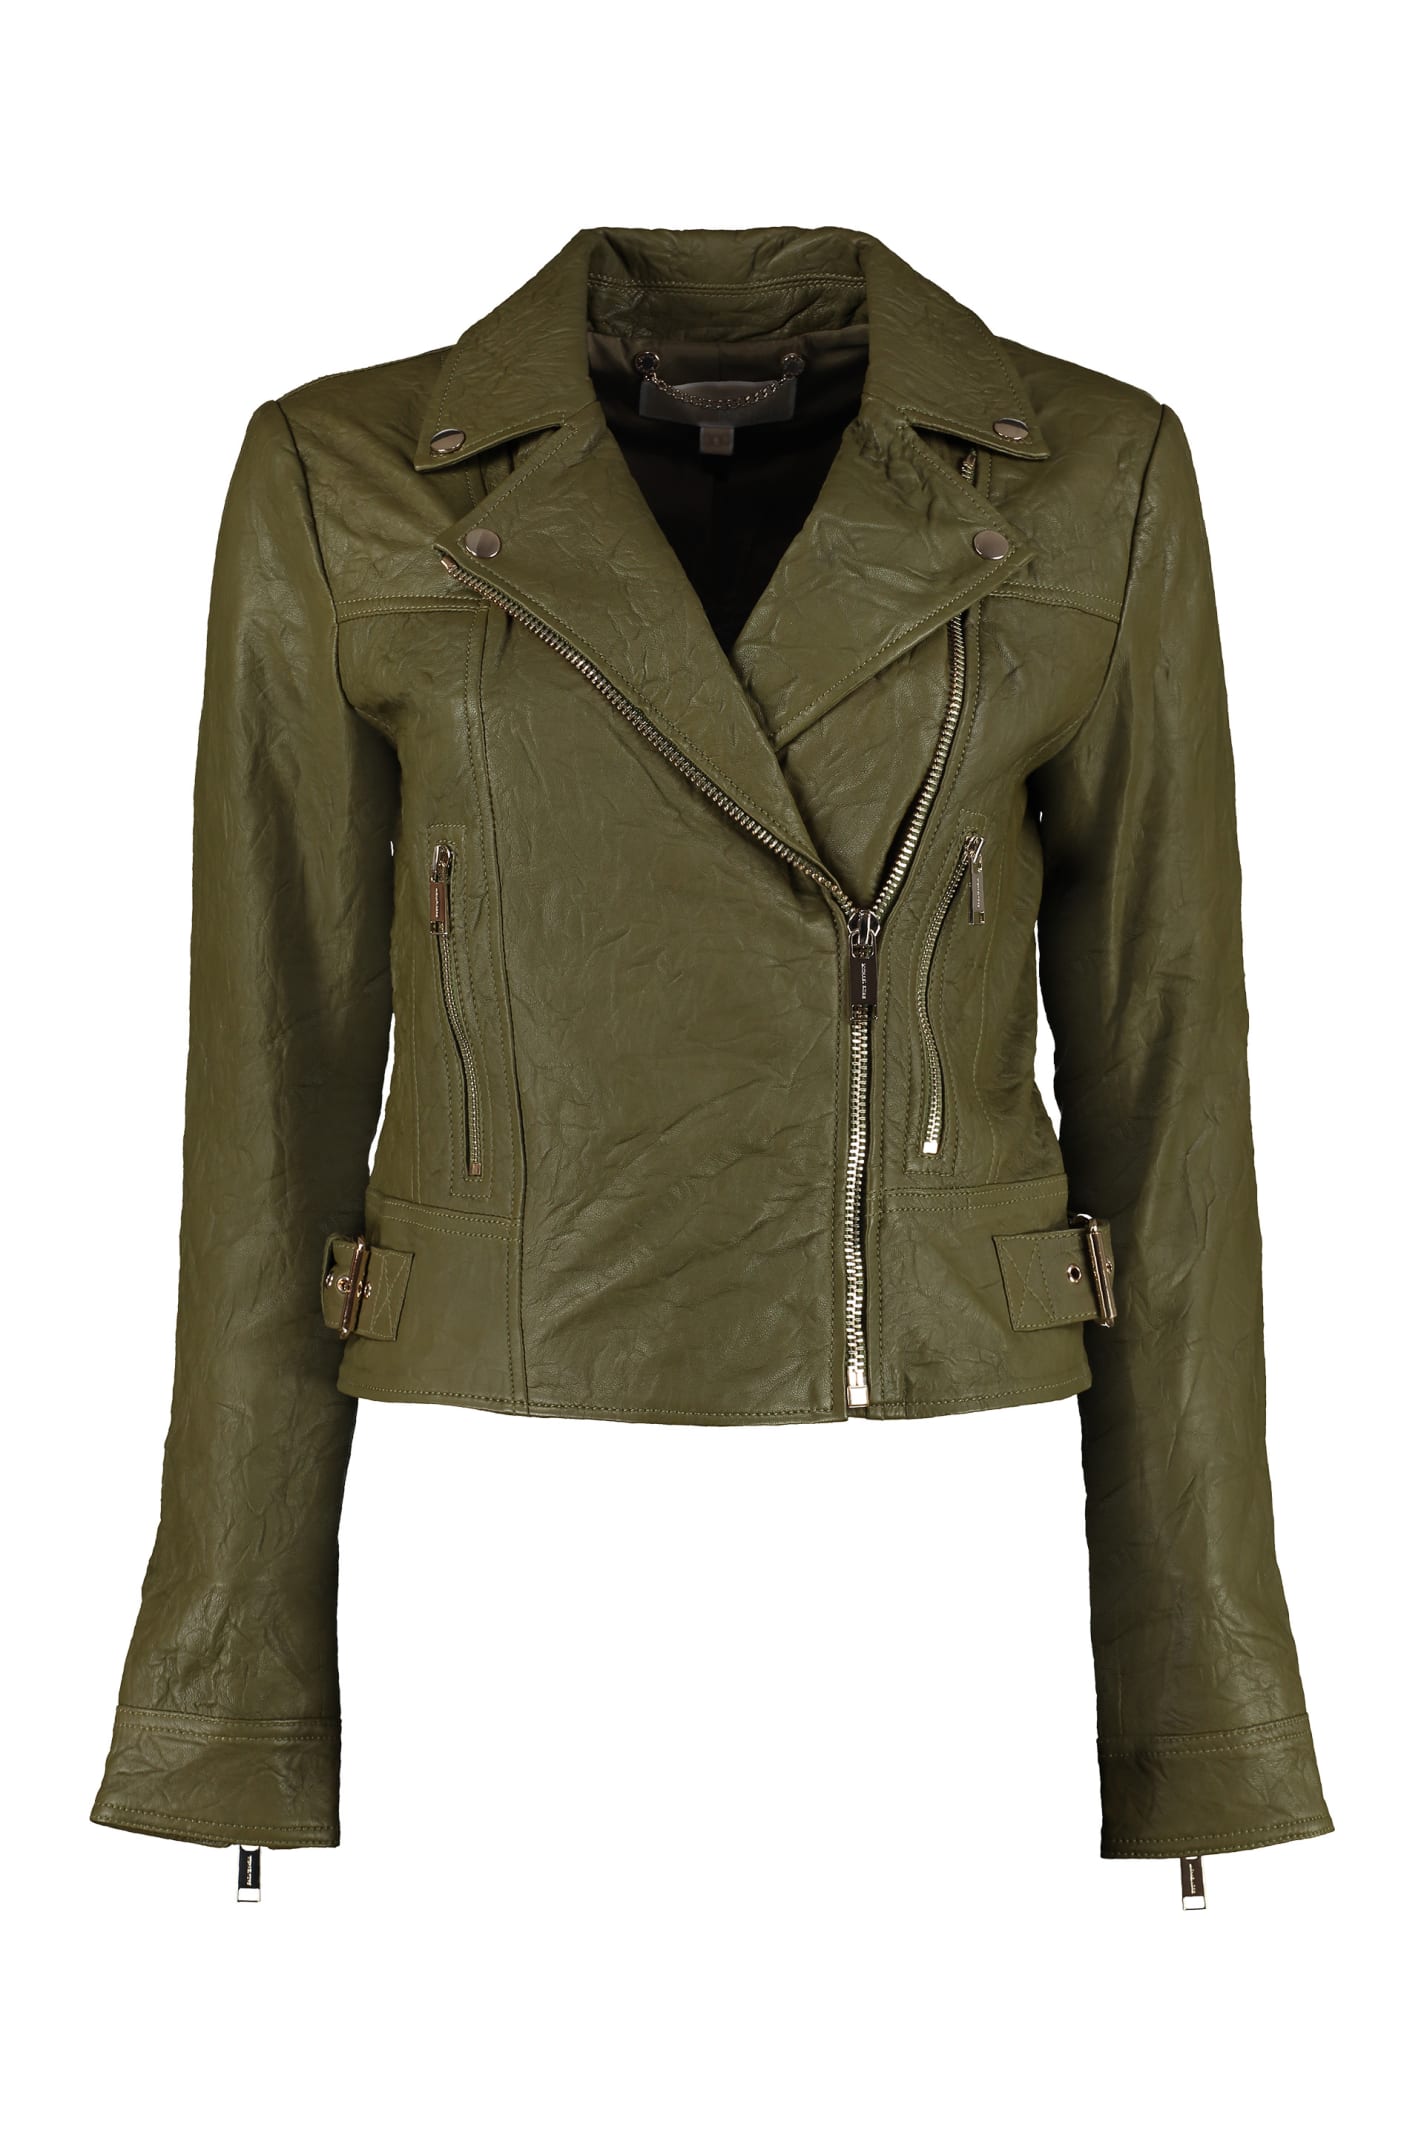 michael kors olive green leather jacket 